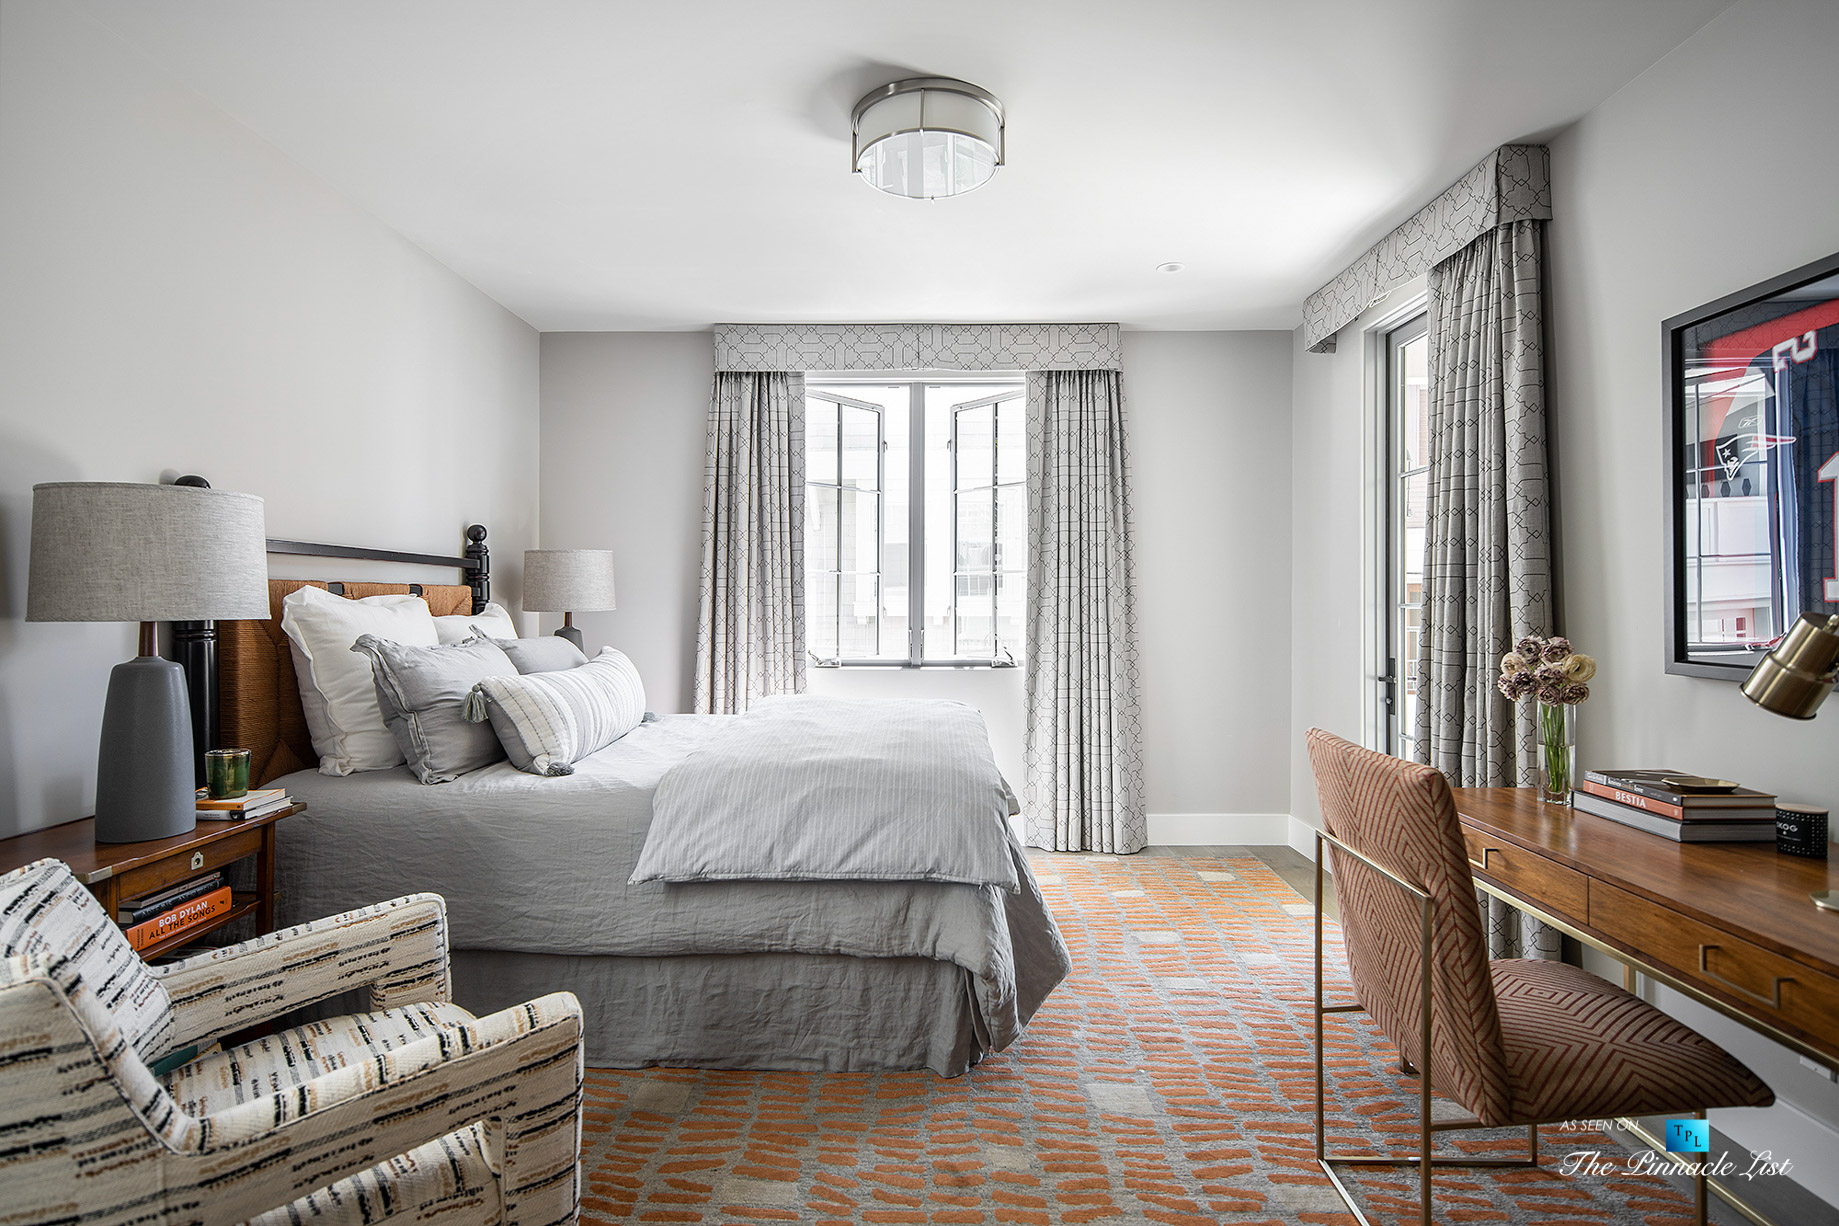 220 8th St, Manhattan Beach, CA, USA - Luxury Real Estate - Ocean View Dream Home - Bedroom